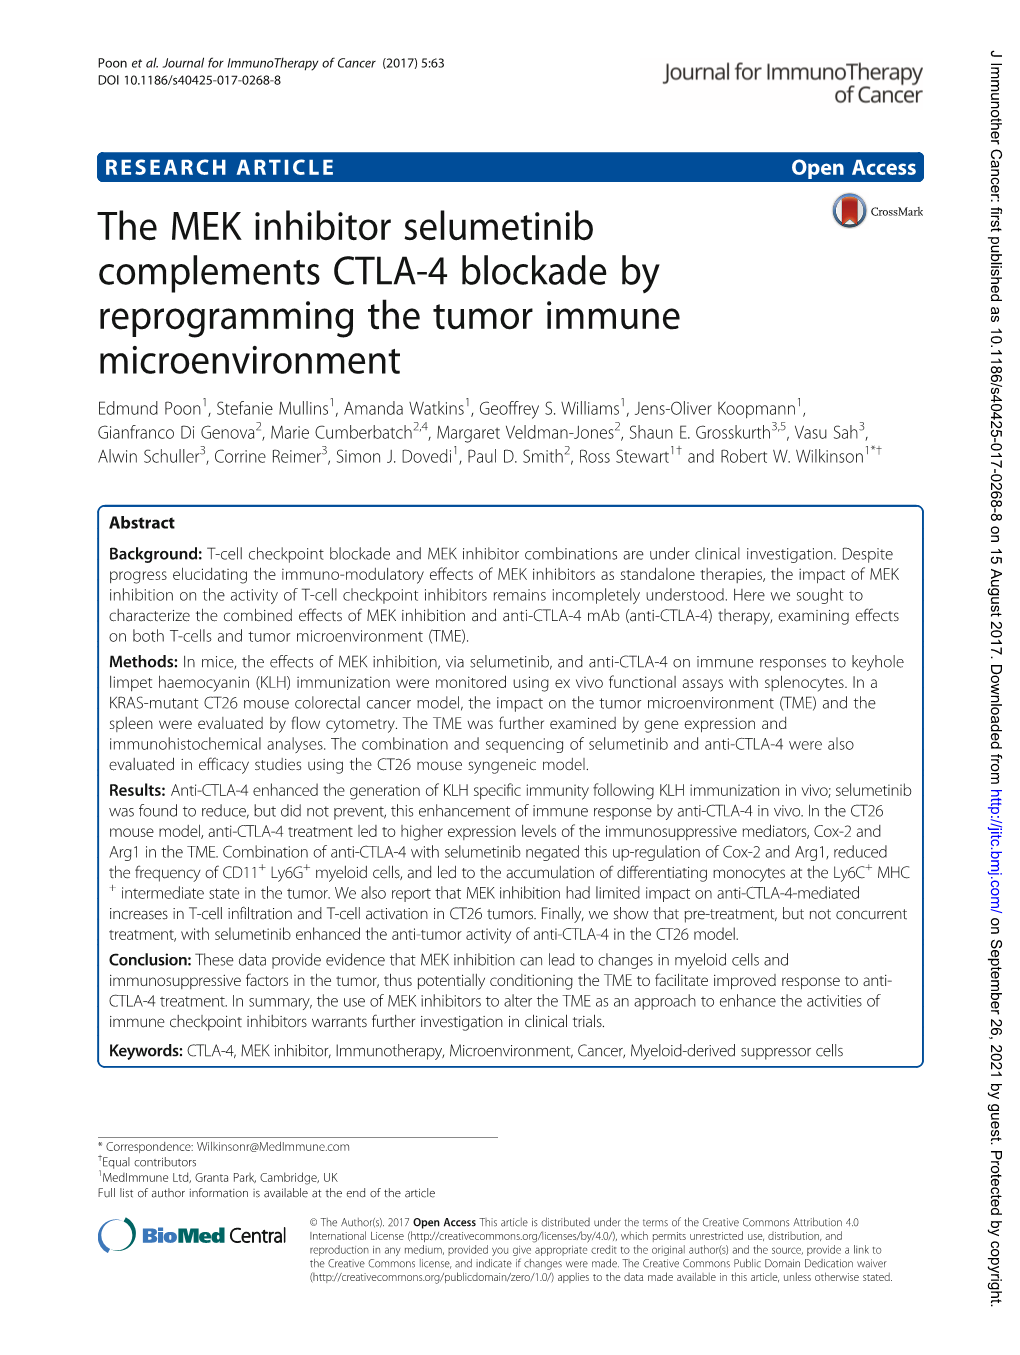 The MEK Inhibitor Selumetinib Complements CTLA-4 Blockade By